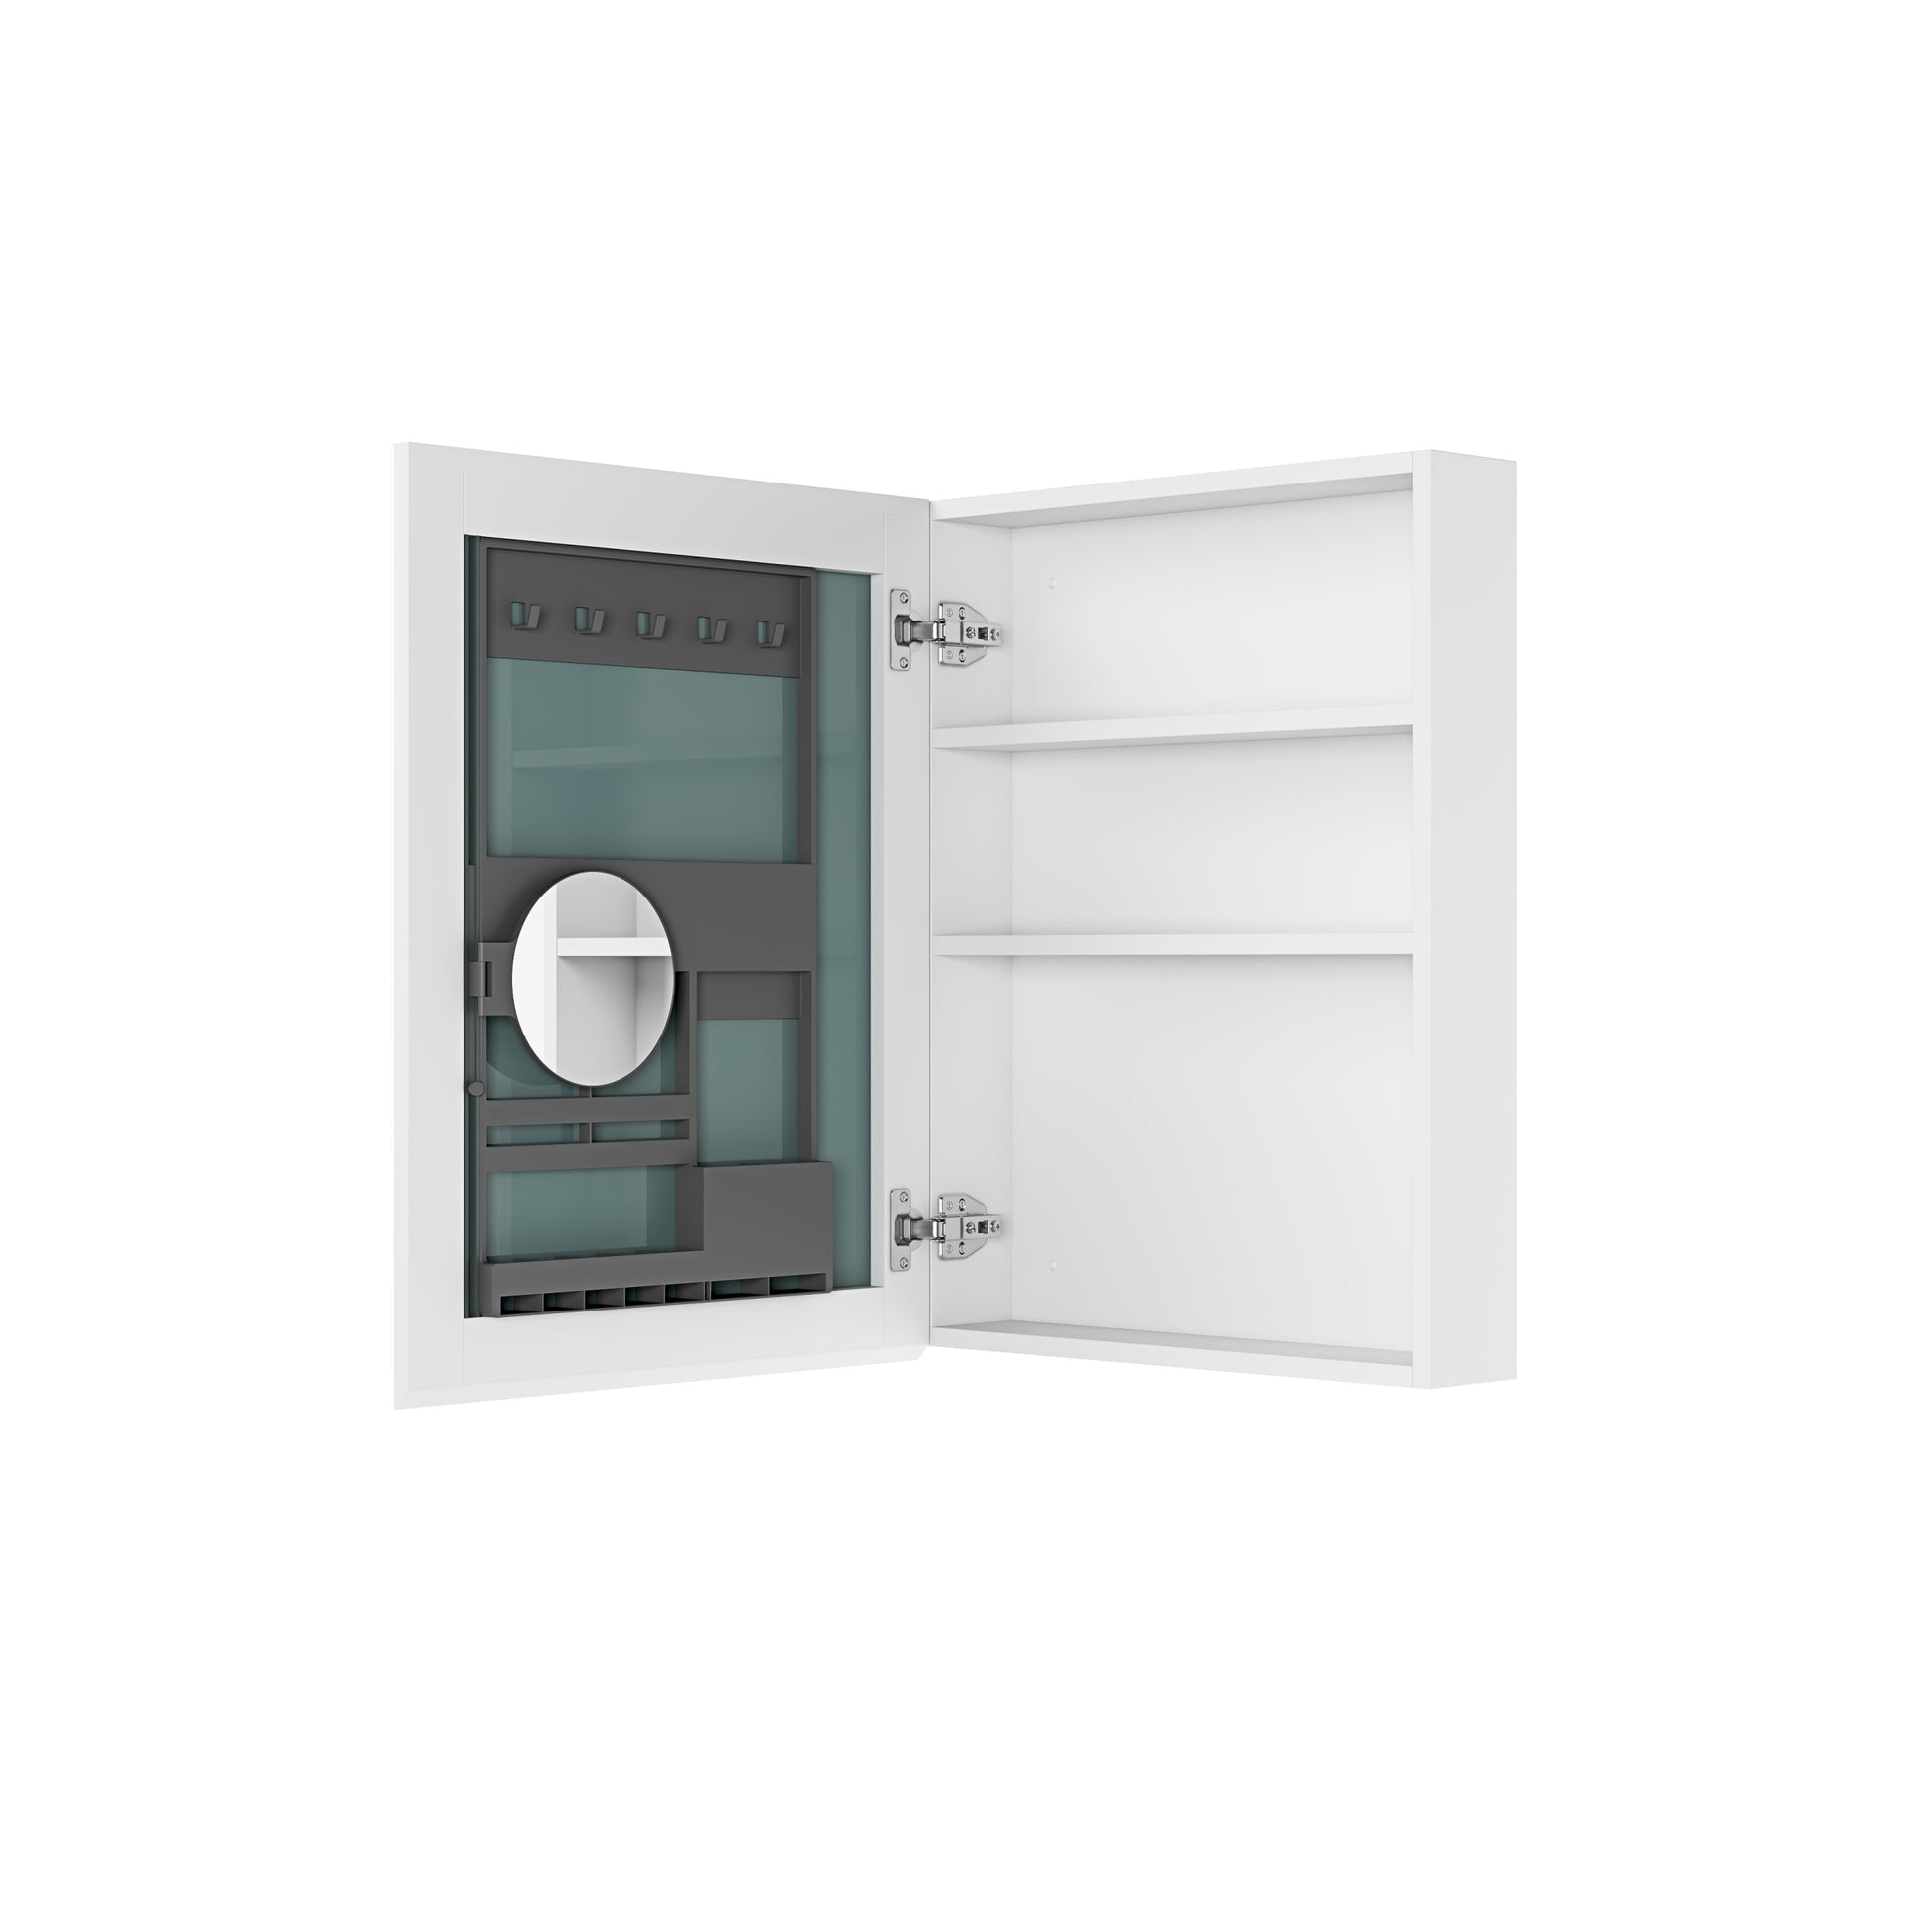 20" W x 26" H Single Door Bathroom Medicine Cabinet white-engineered wood